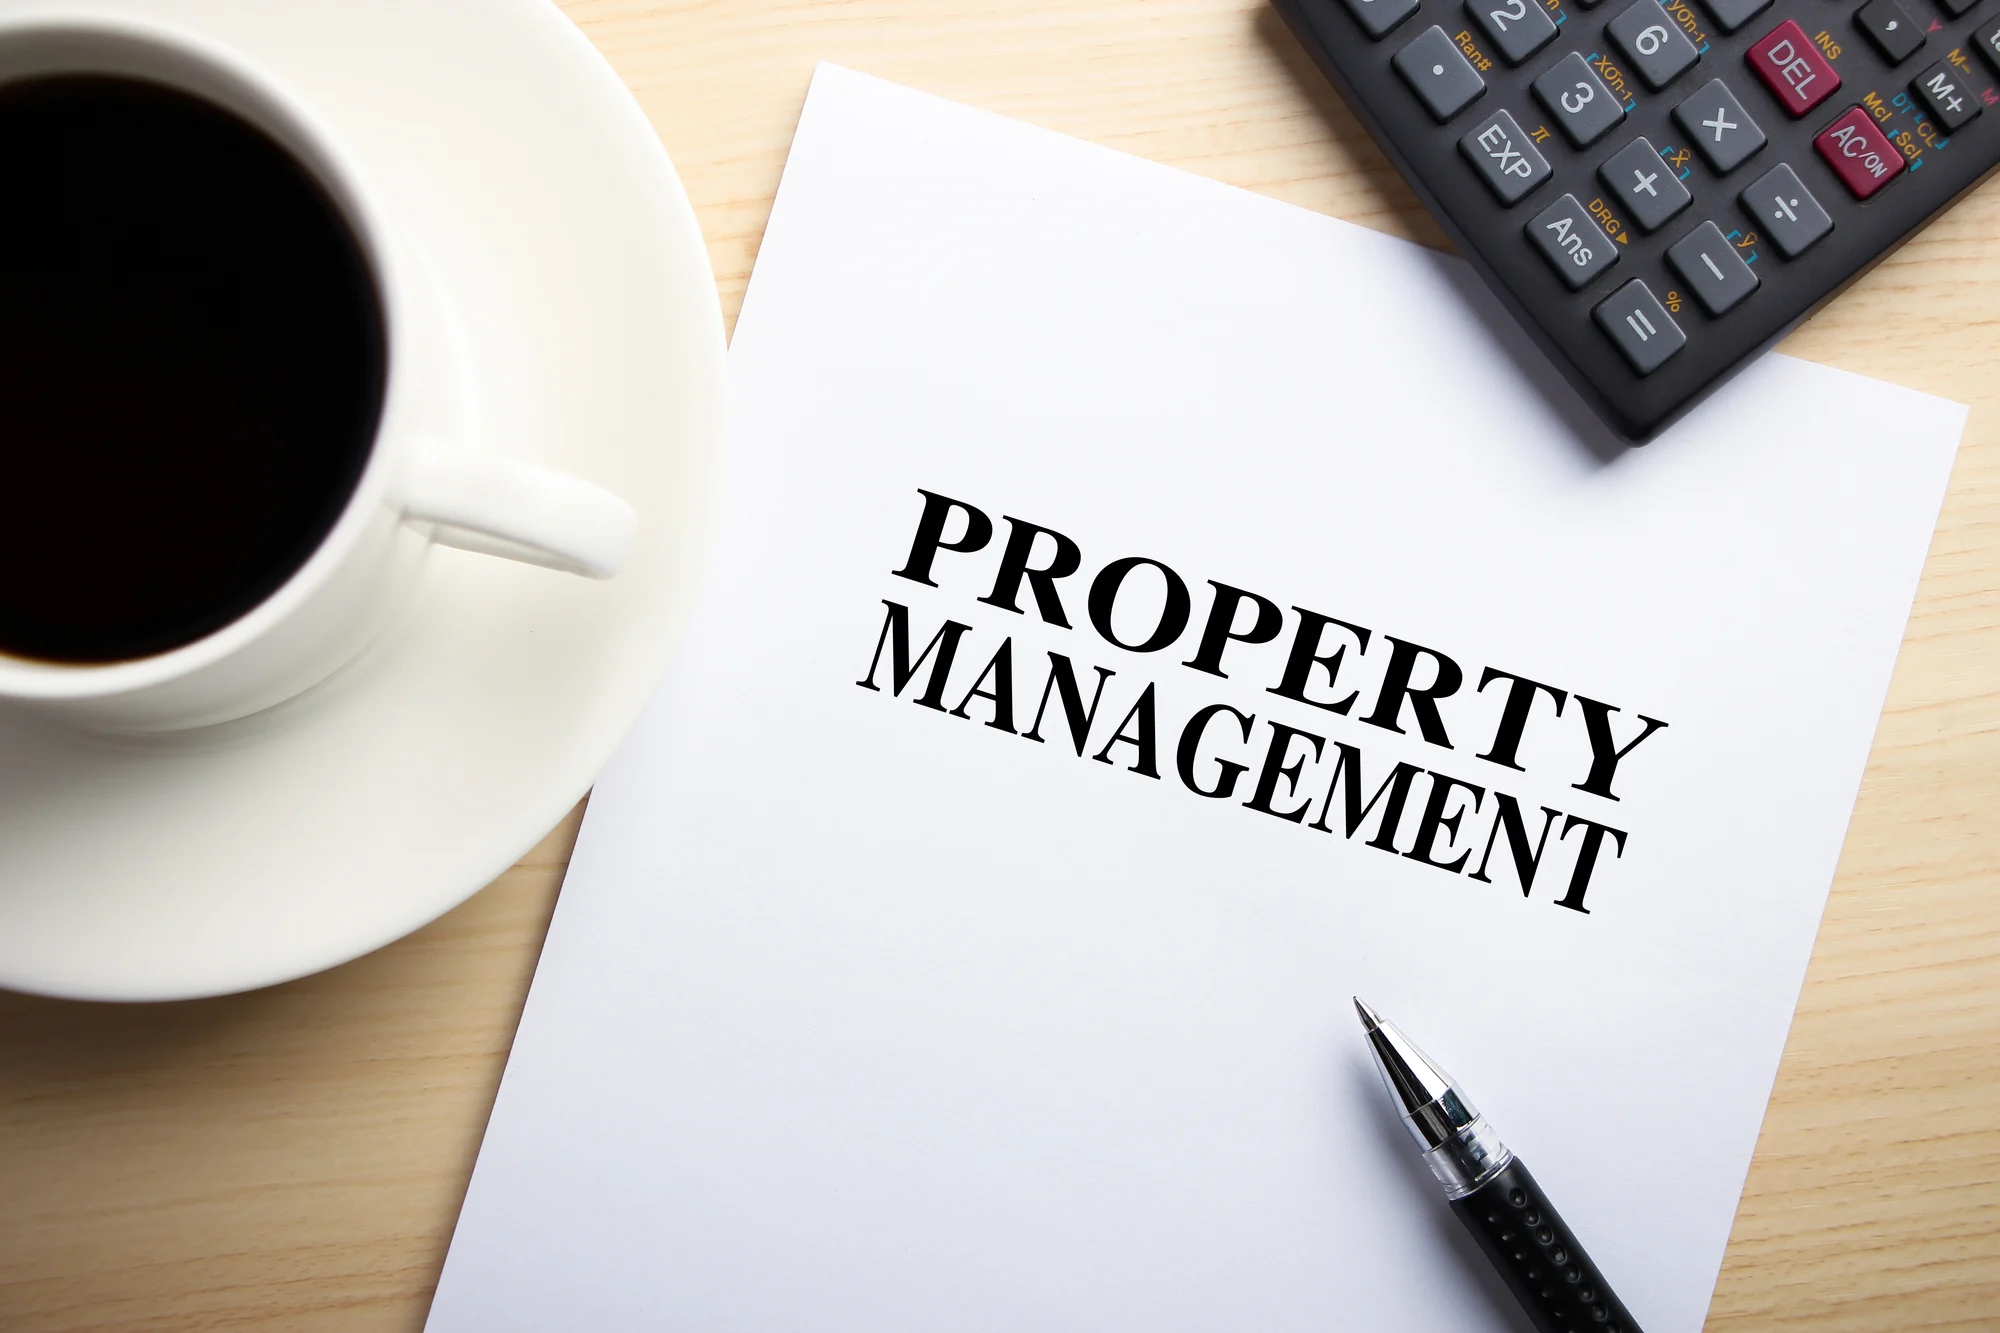 Property Management 2